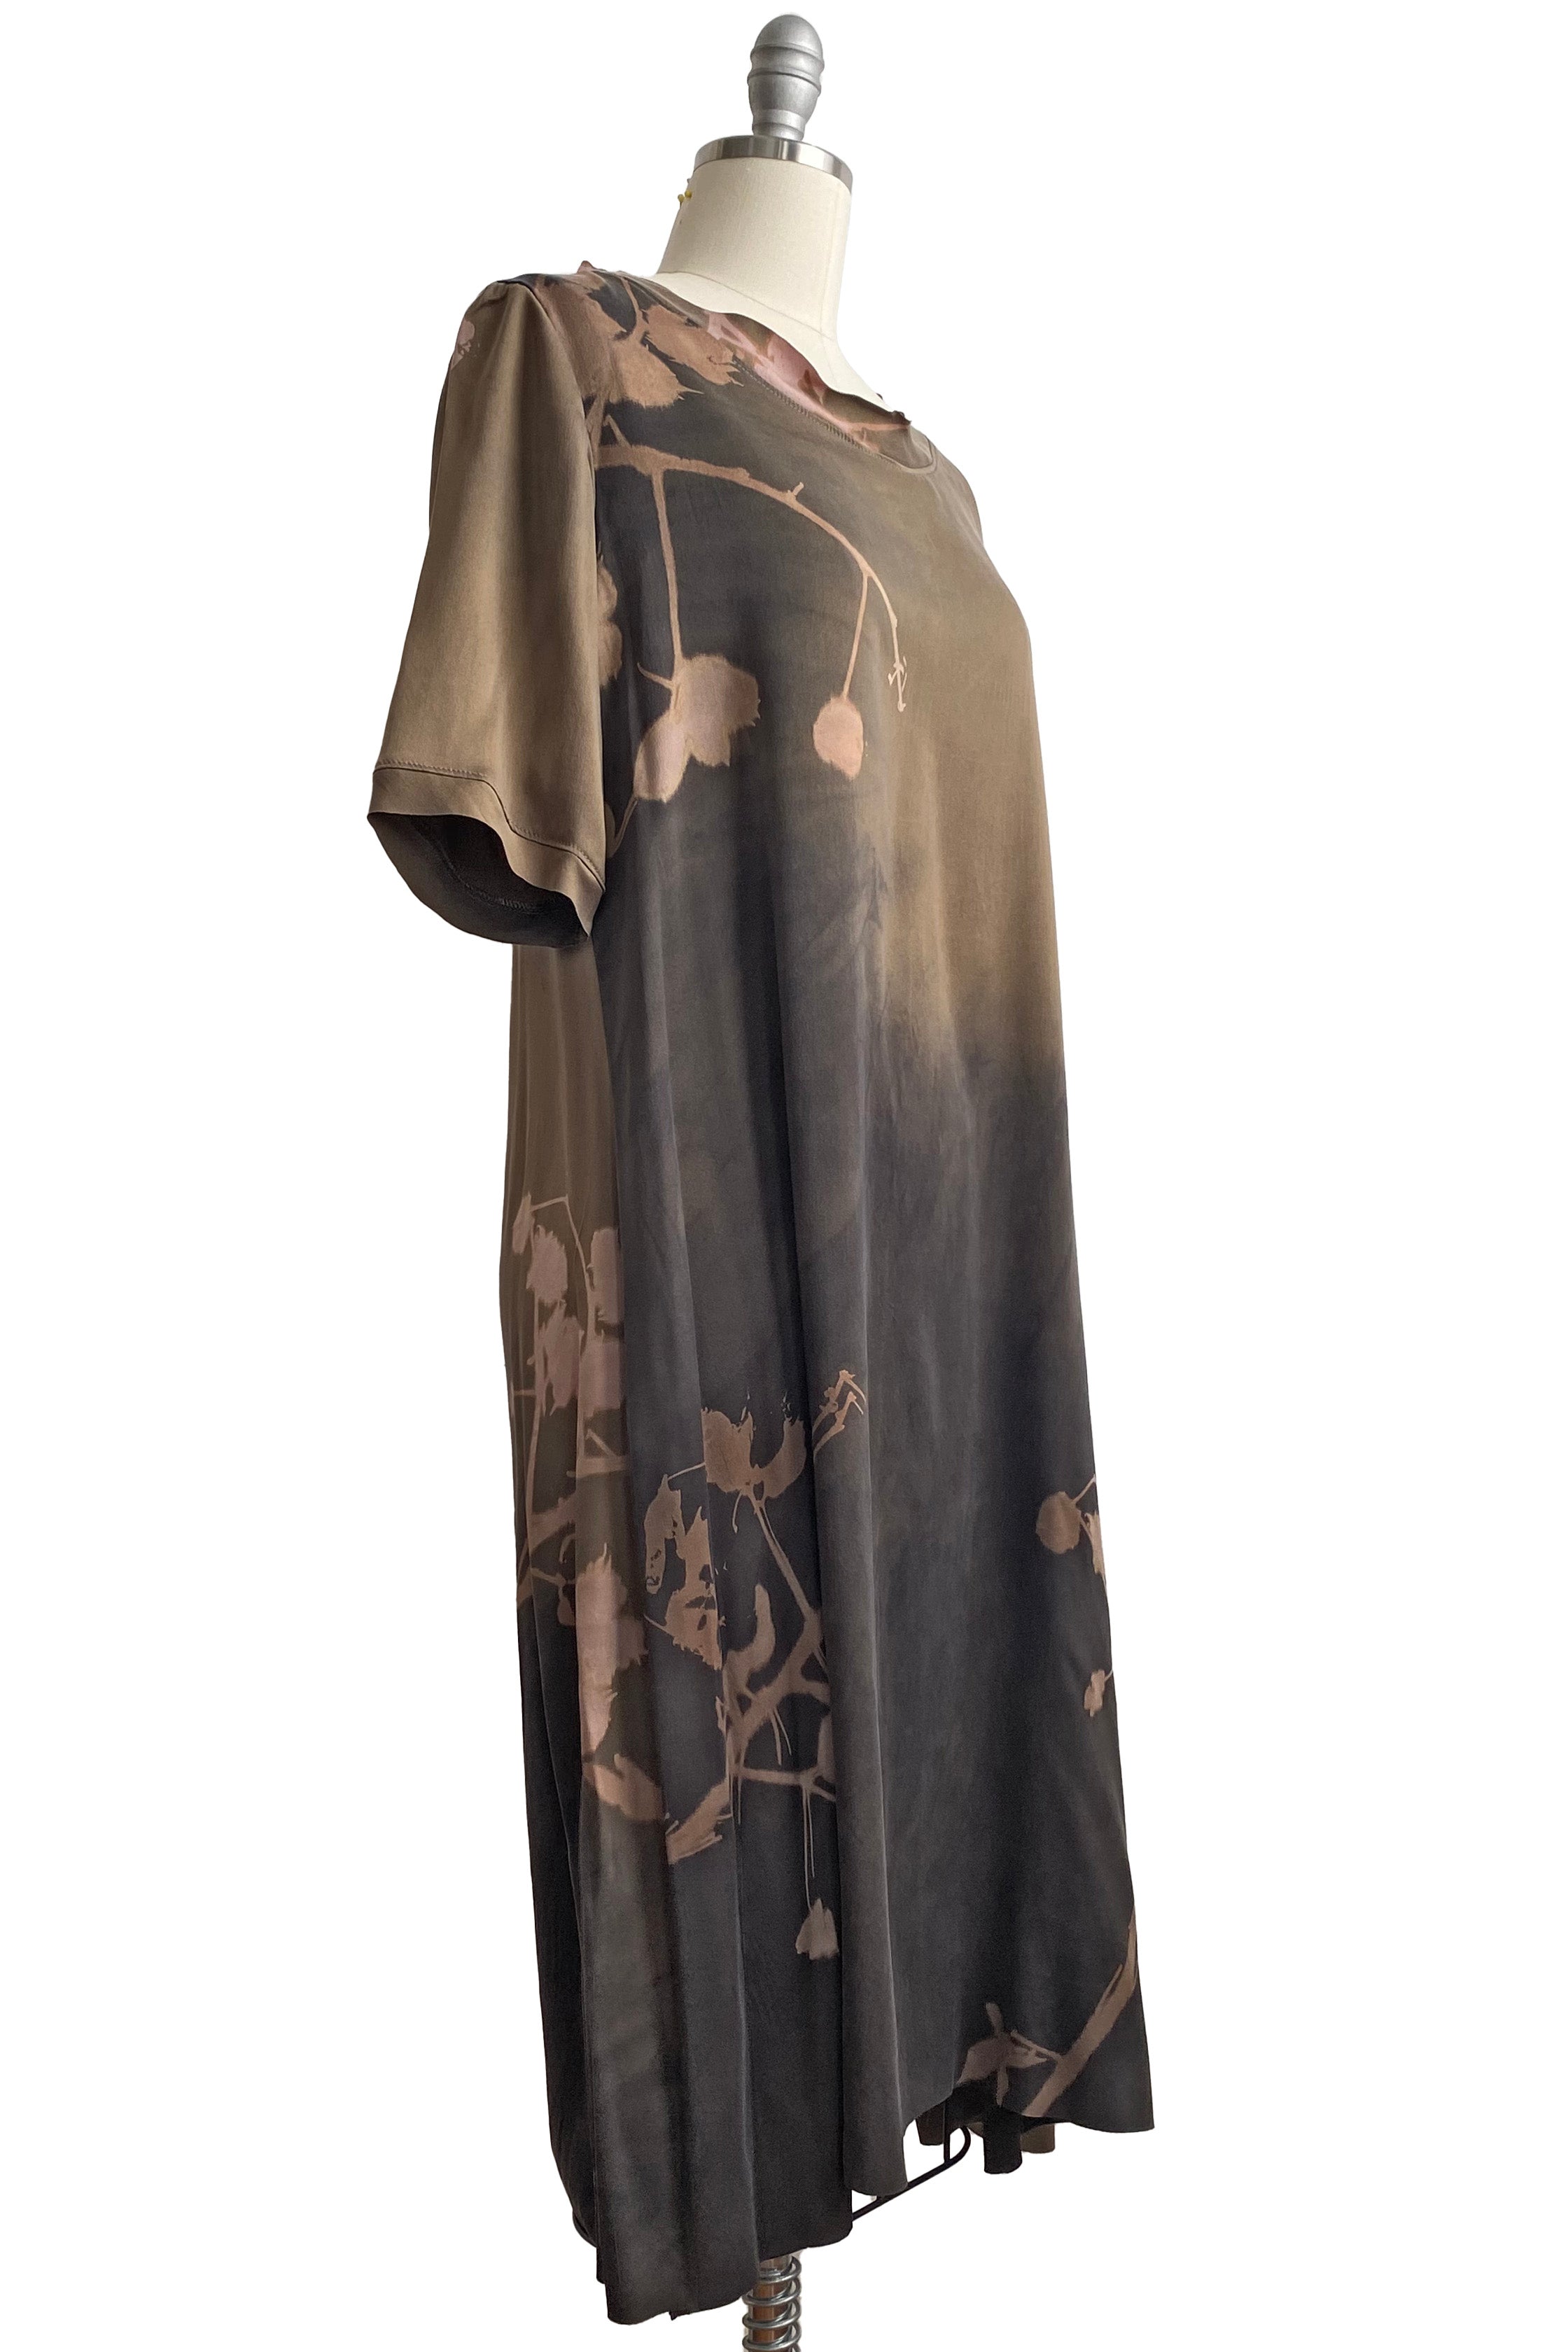 Jazzyfest Dress in Silk w/ Cotton Print - Brown Ombré - Small